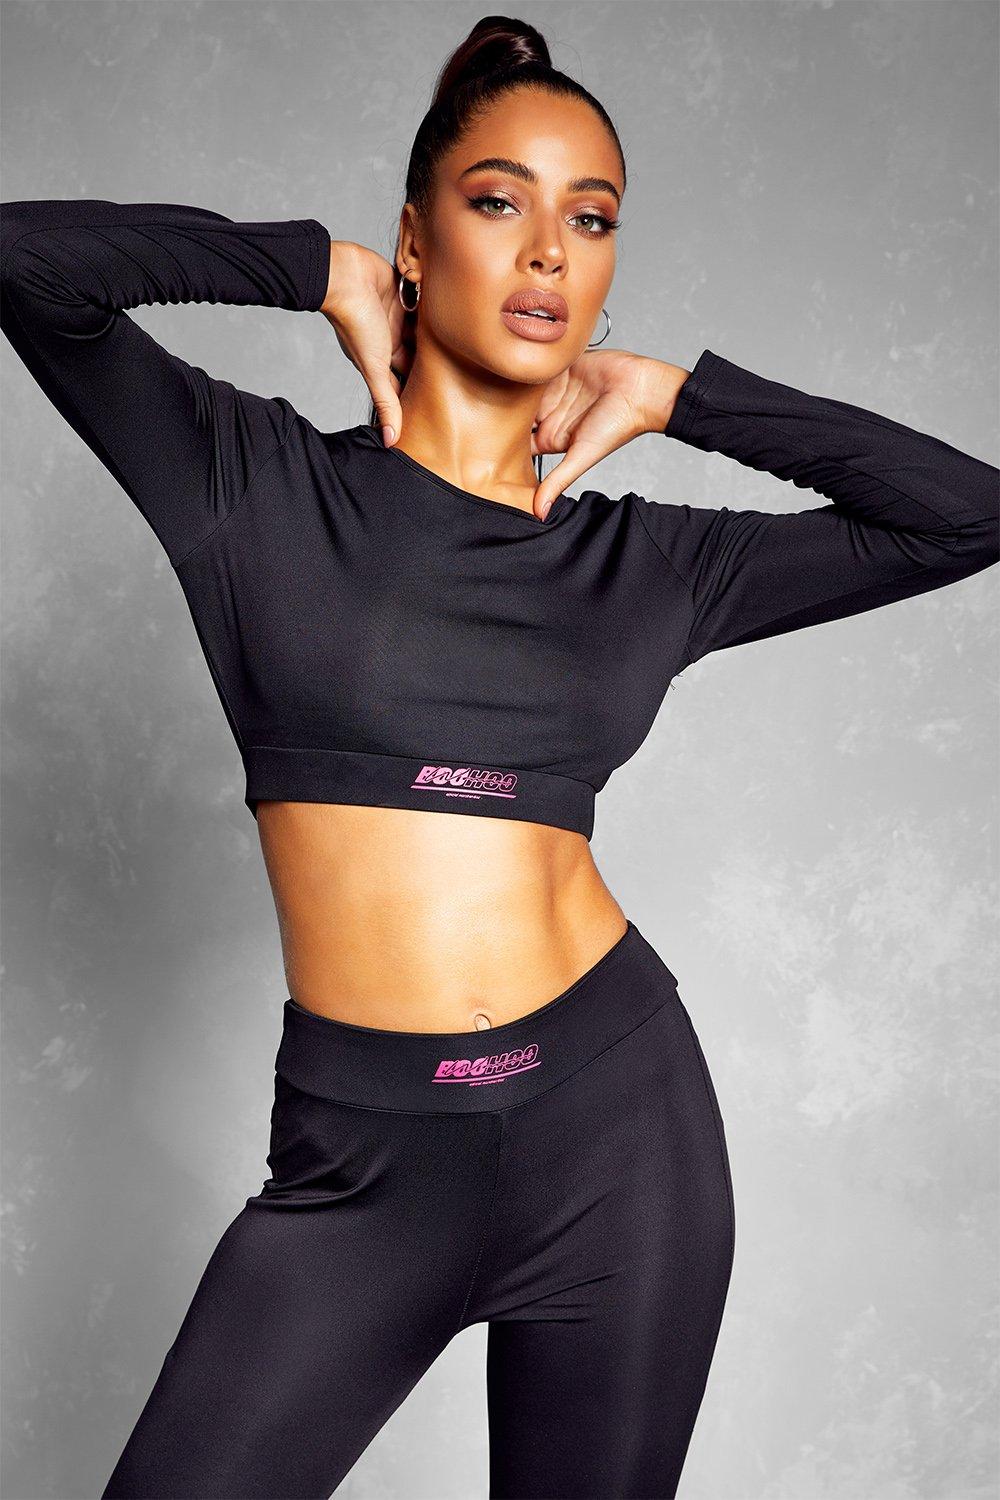 https://media.boohoo.com/i/boohoo/fzz74708_black_xl_3/female-black-fit-woman-long-sleeve-top-&-legging-gym-set